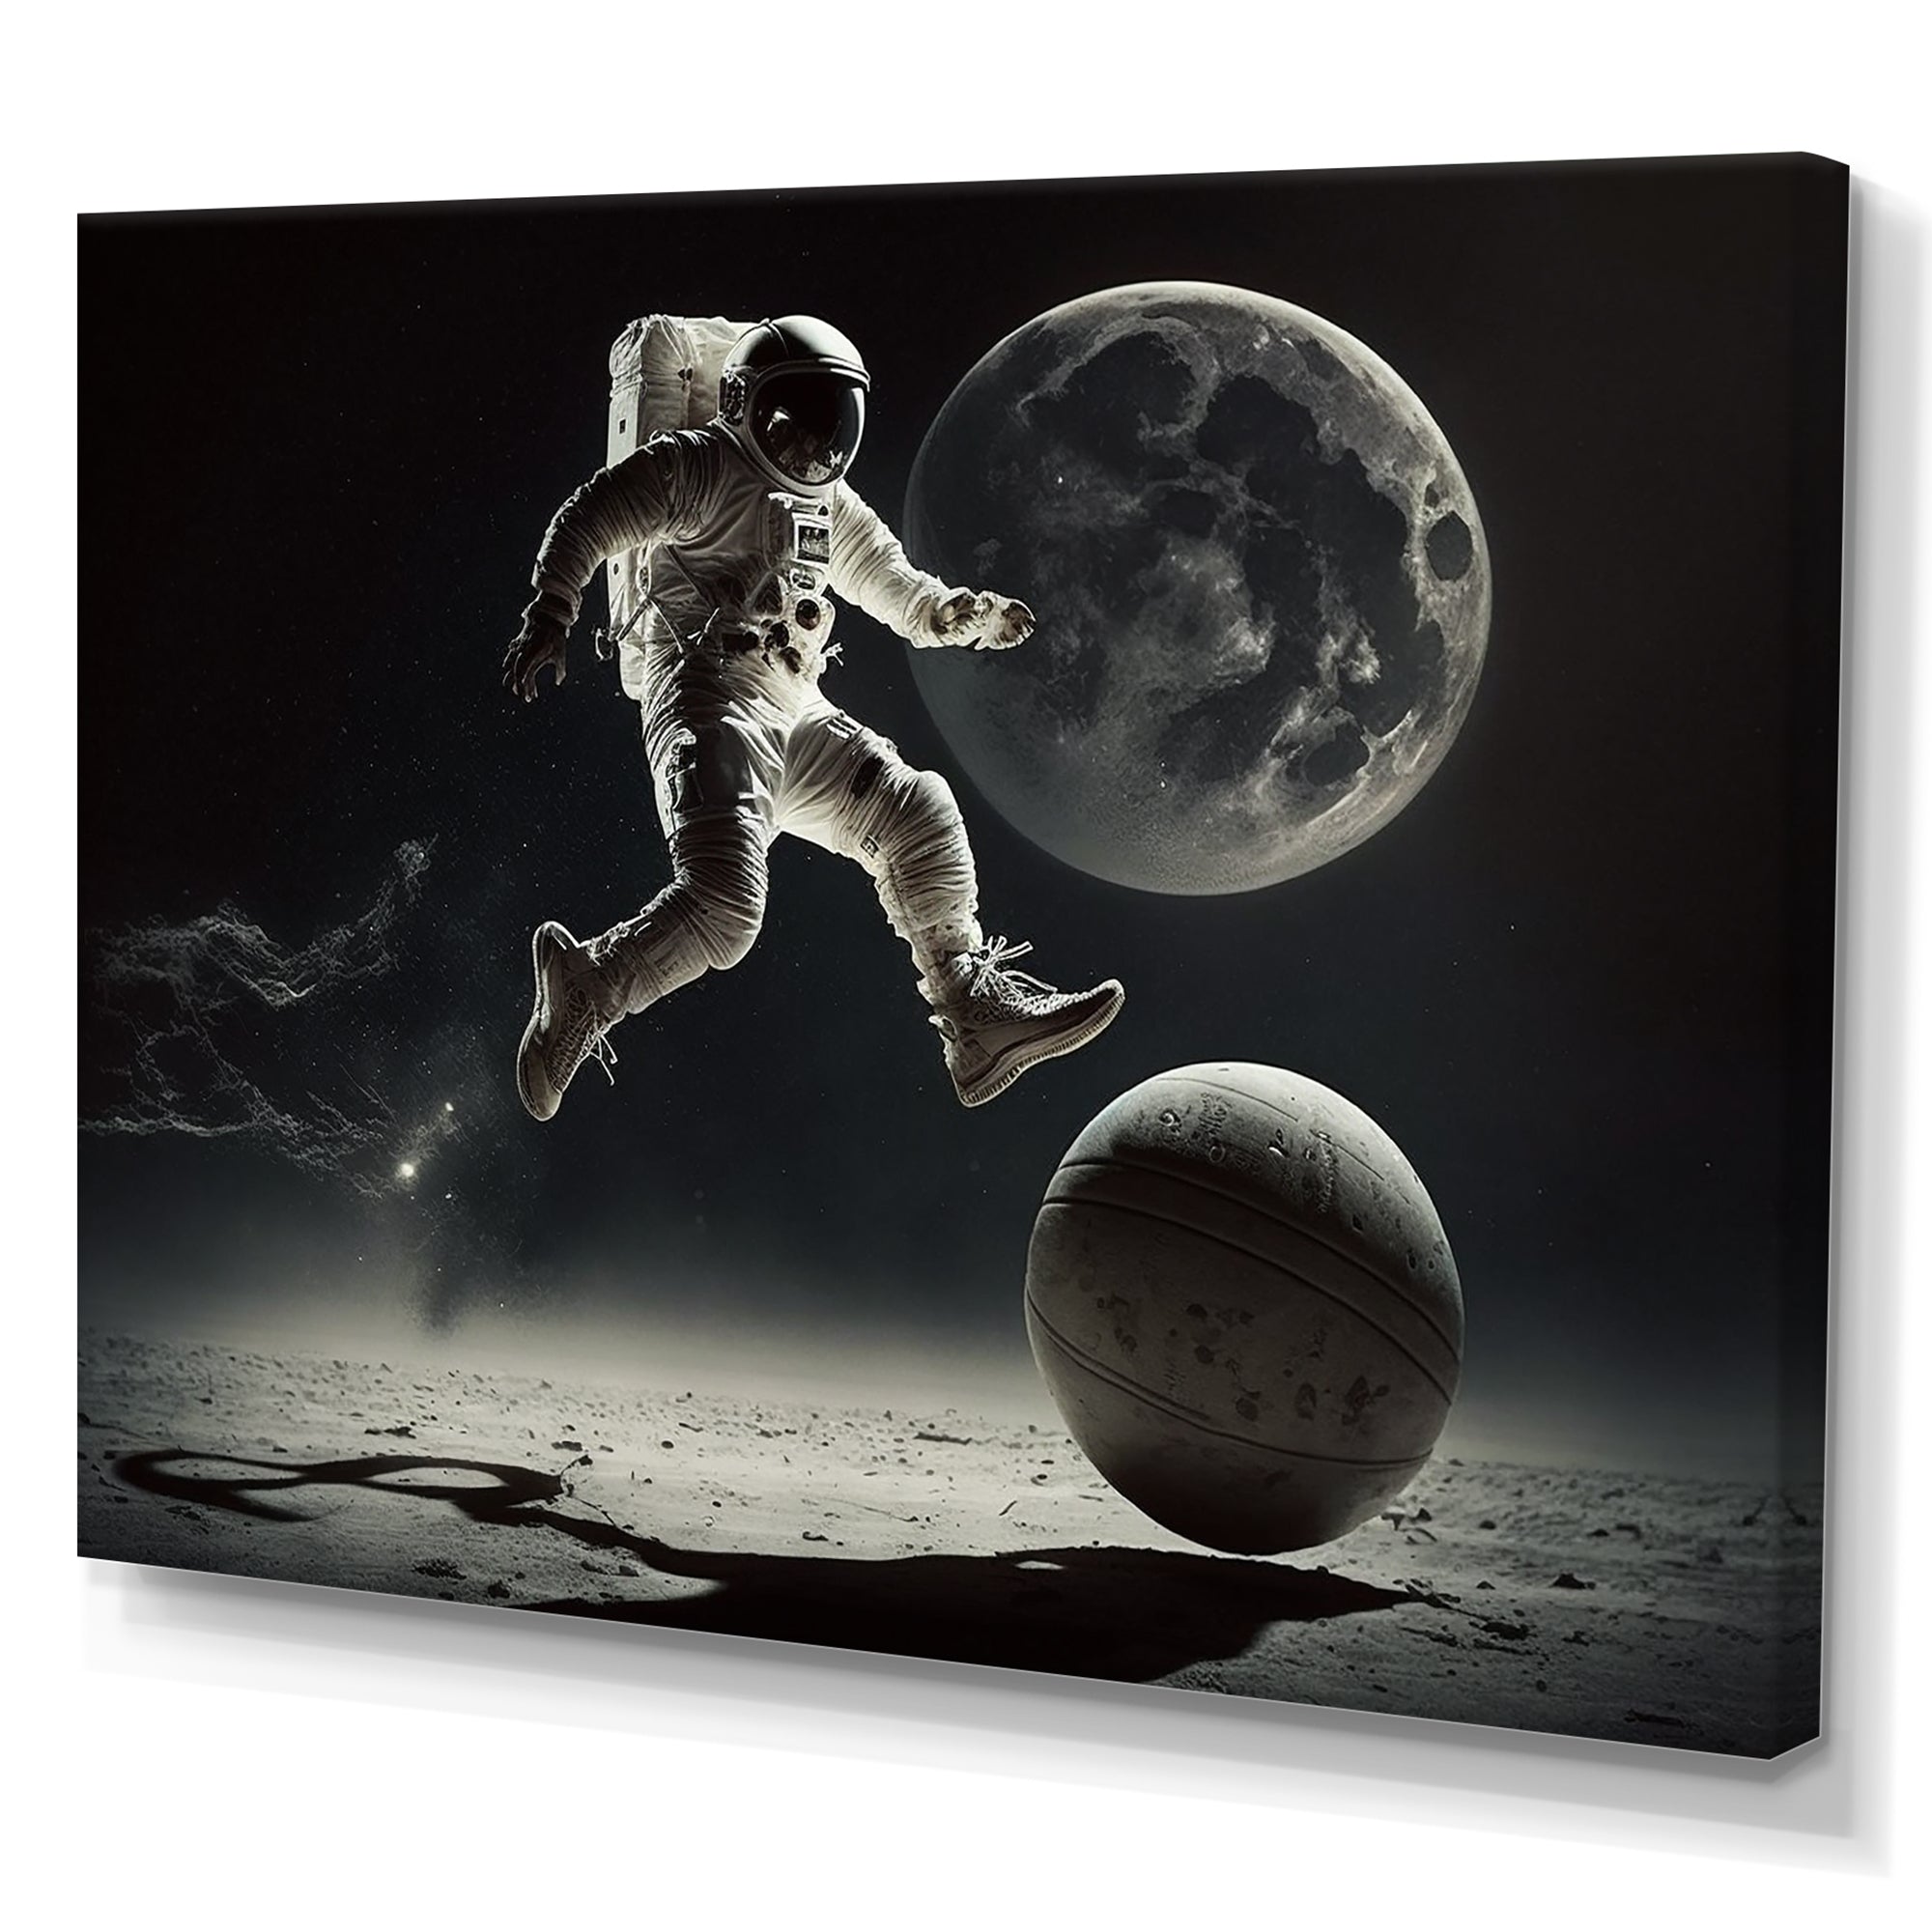 Soccer On The Moon